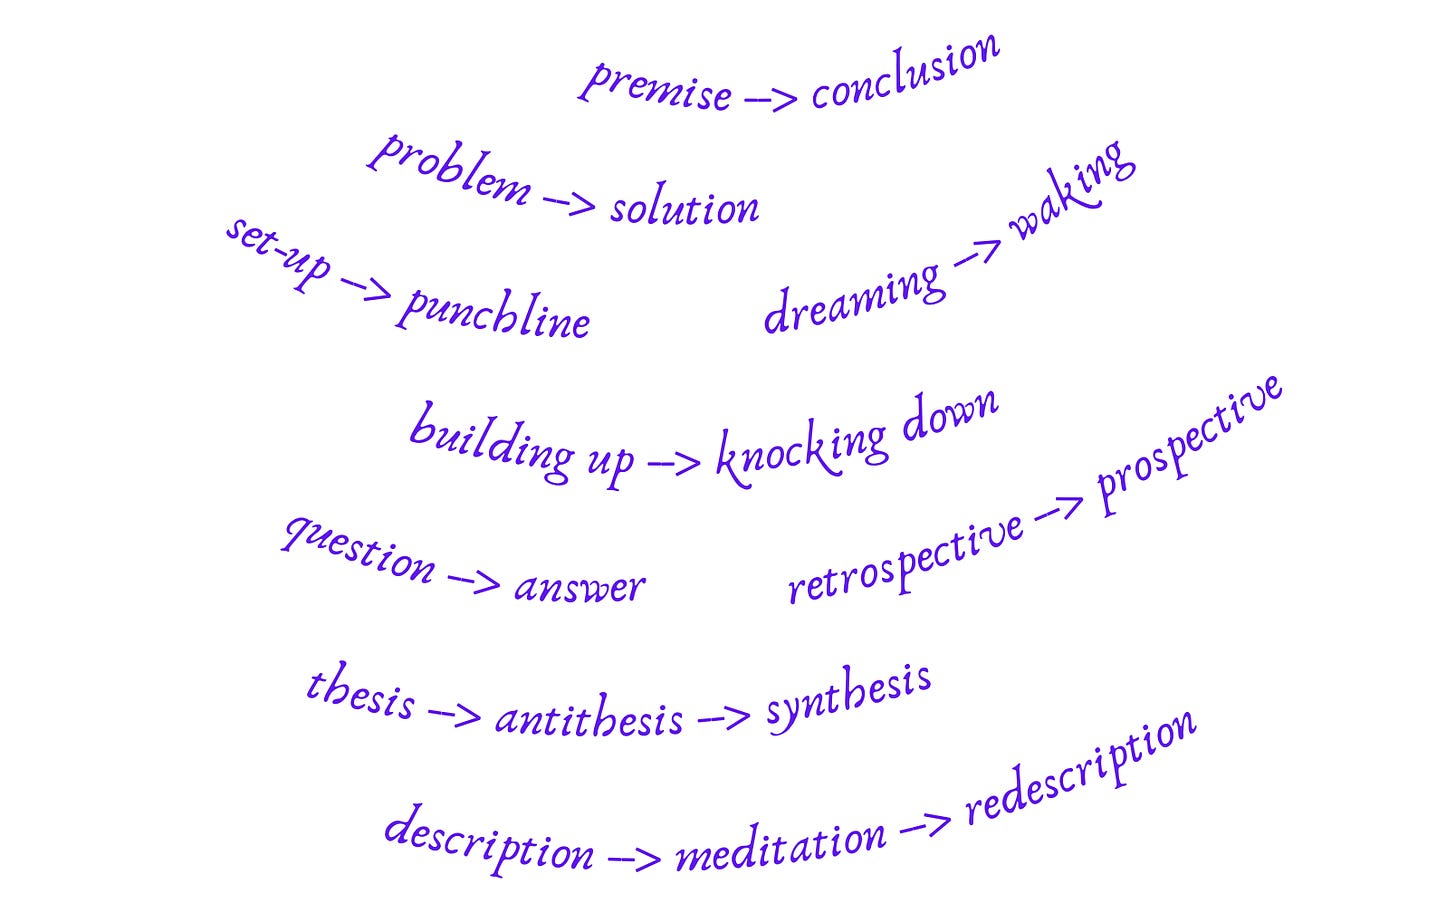 Types of volta: premise --> conclusion; problem --> solution; set-up --> punchline; dreaming --> waking; building up --> knocking down; question --> answer; retrospective --> prospective; thesis--> antithesis --> synthesis; description --> meditation --> redescription